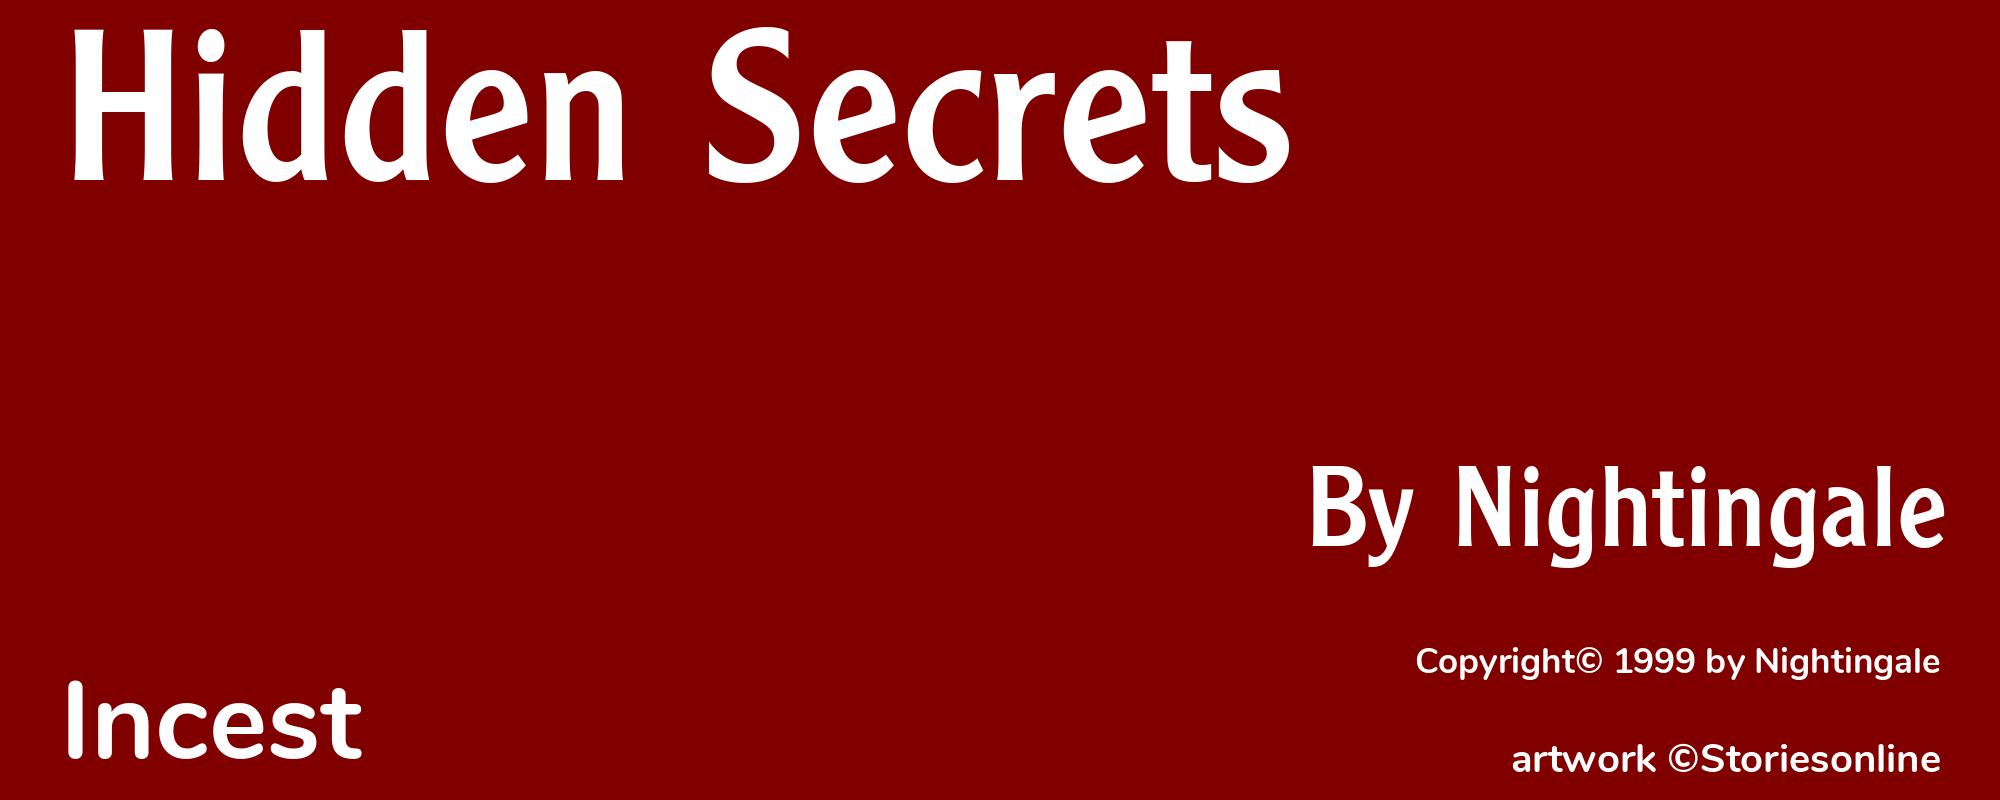 Hidden Secrets - Cover